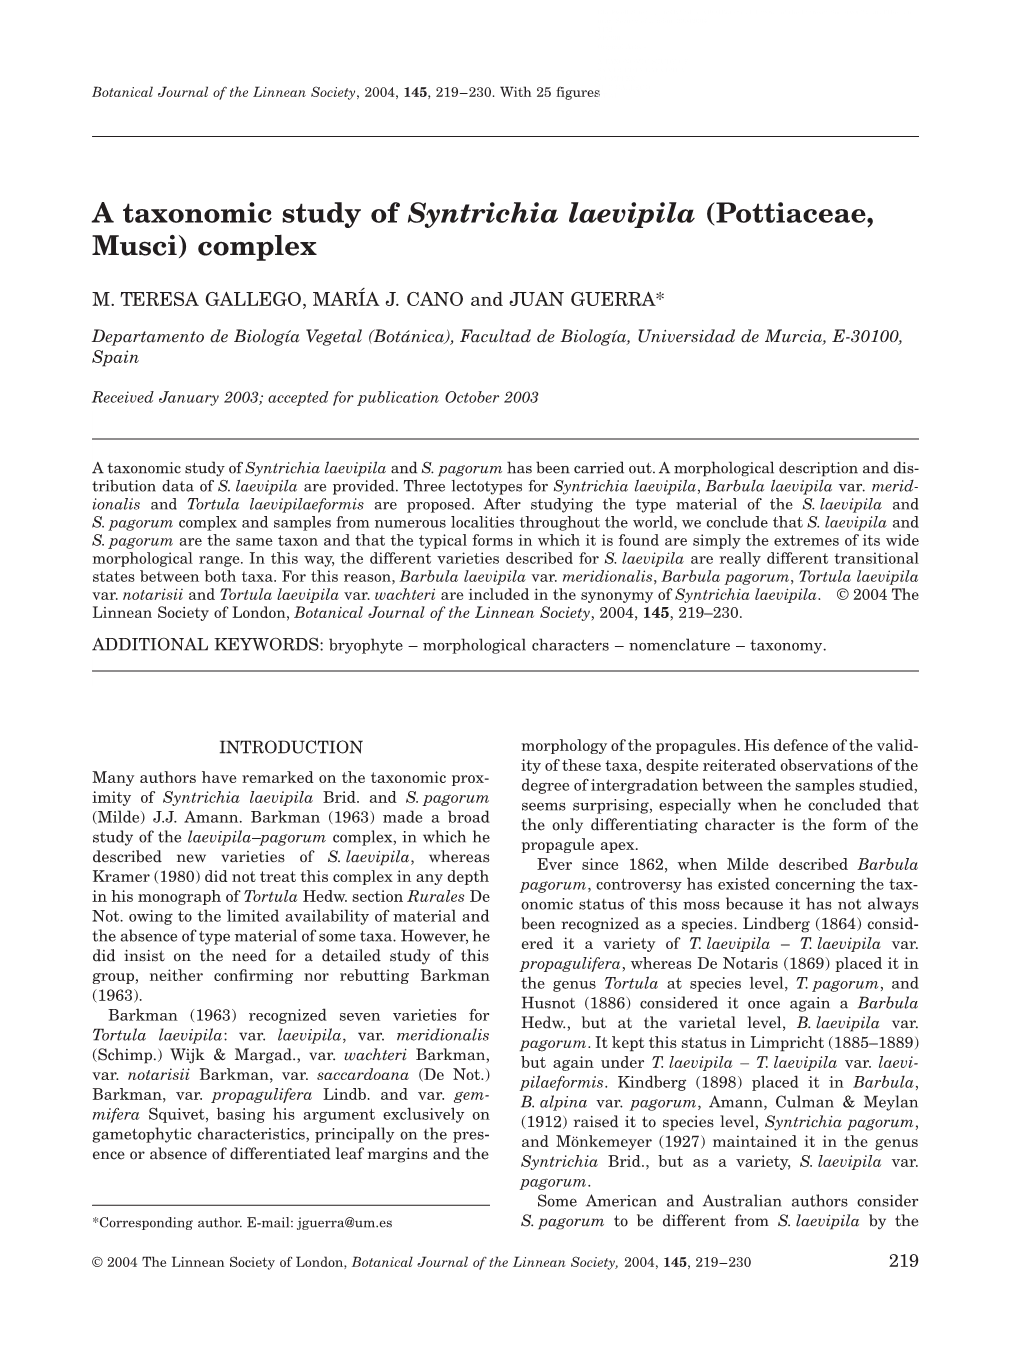 A Taxonomic Study of Syntrichia Laevipila Complex M